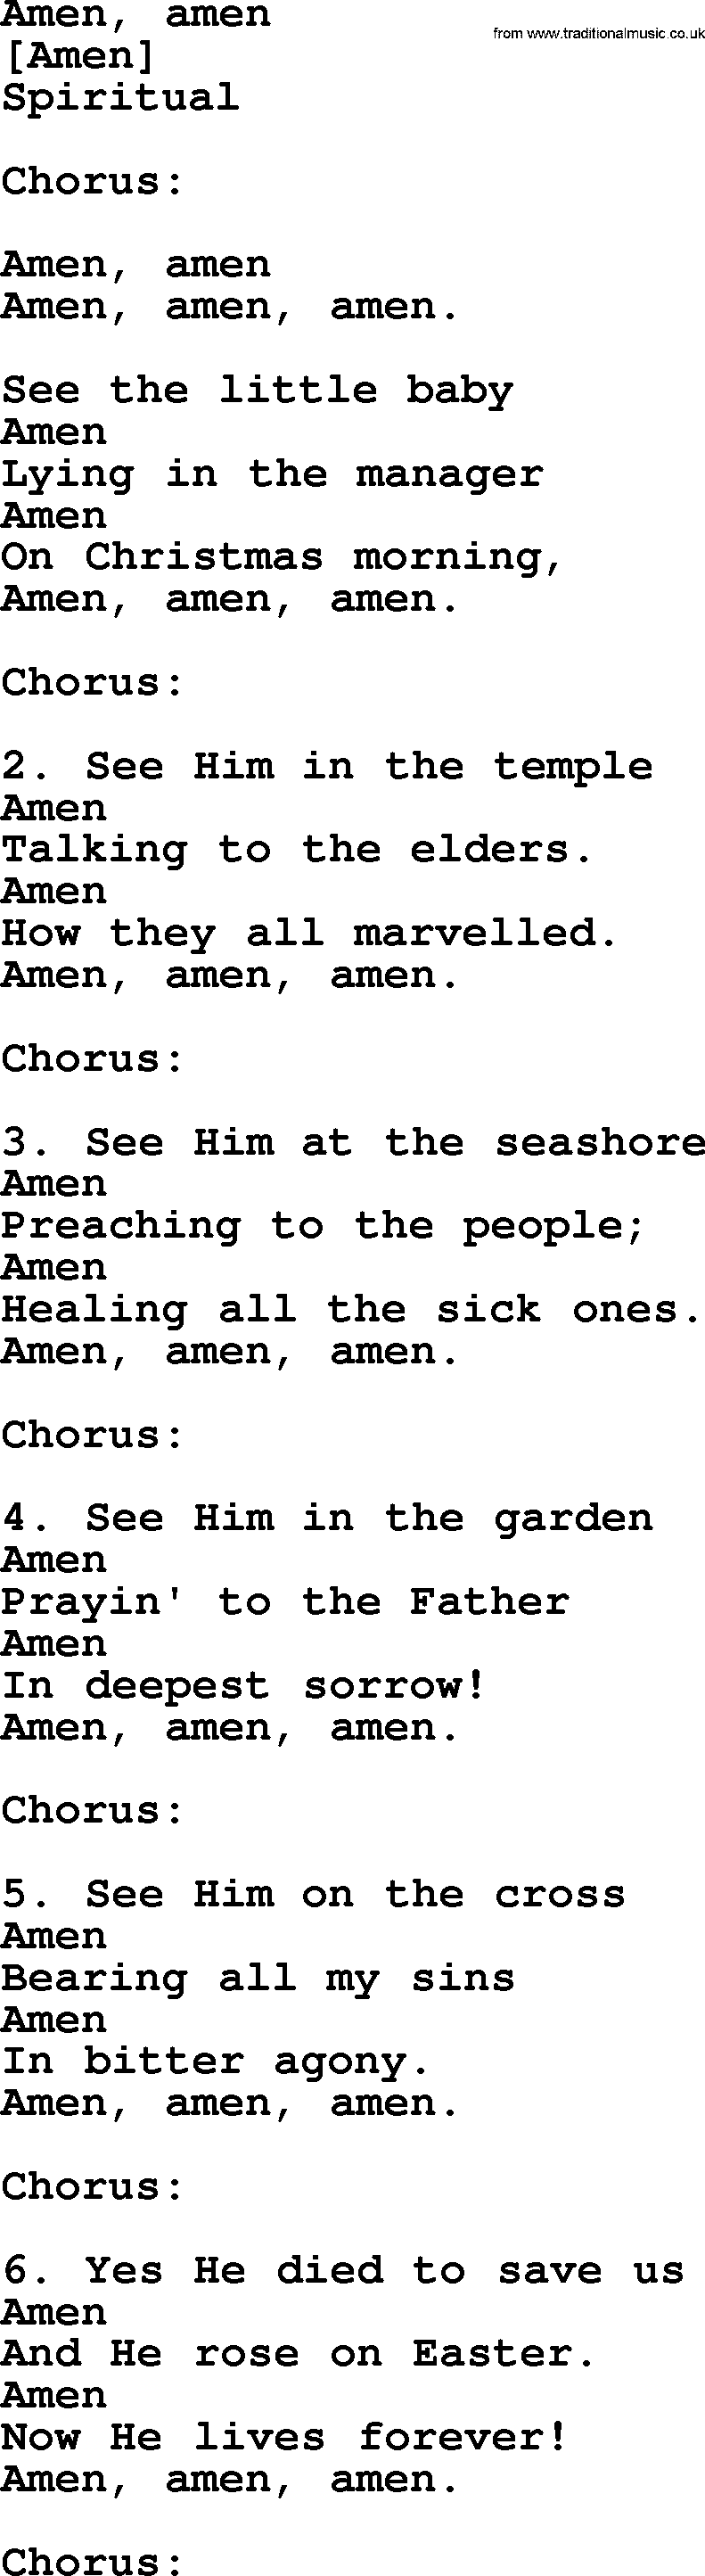 Old American Song: Amen, Amen, lyrics